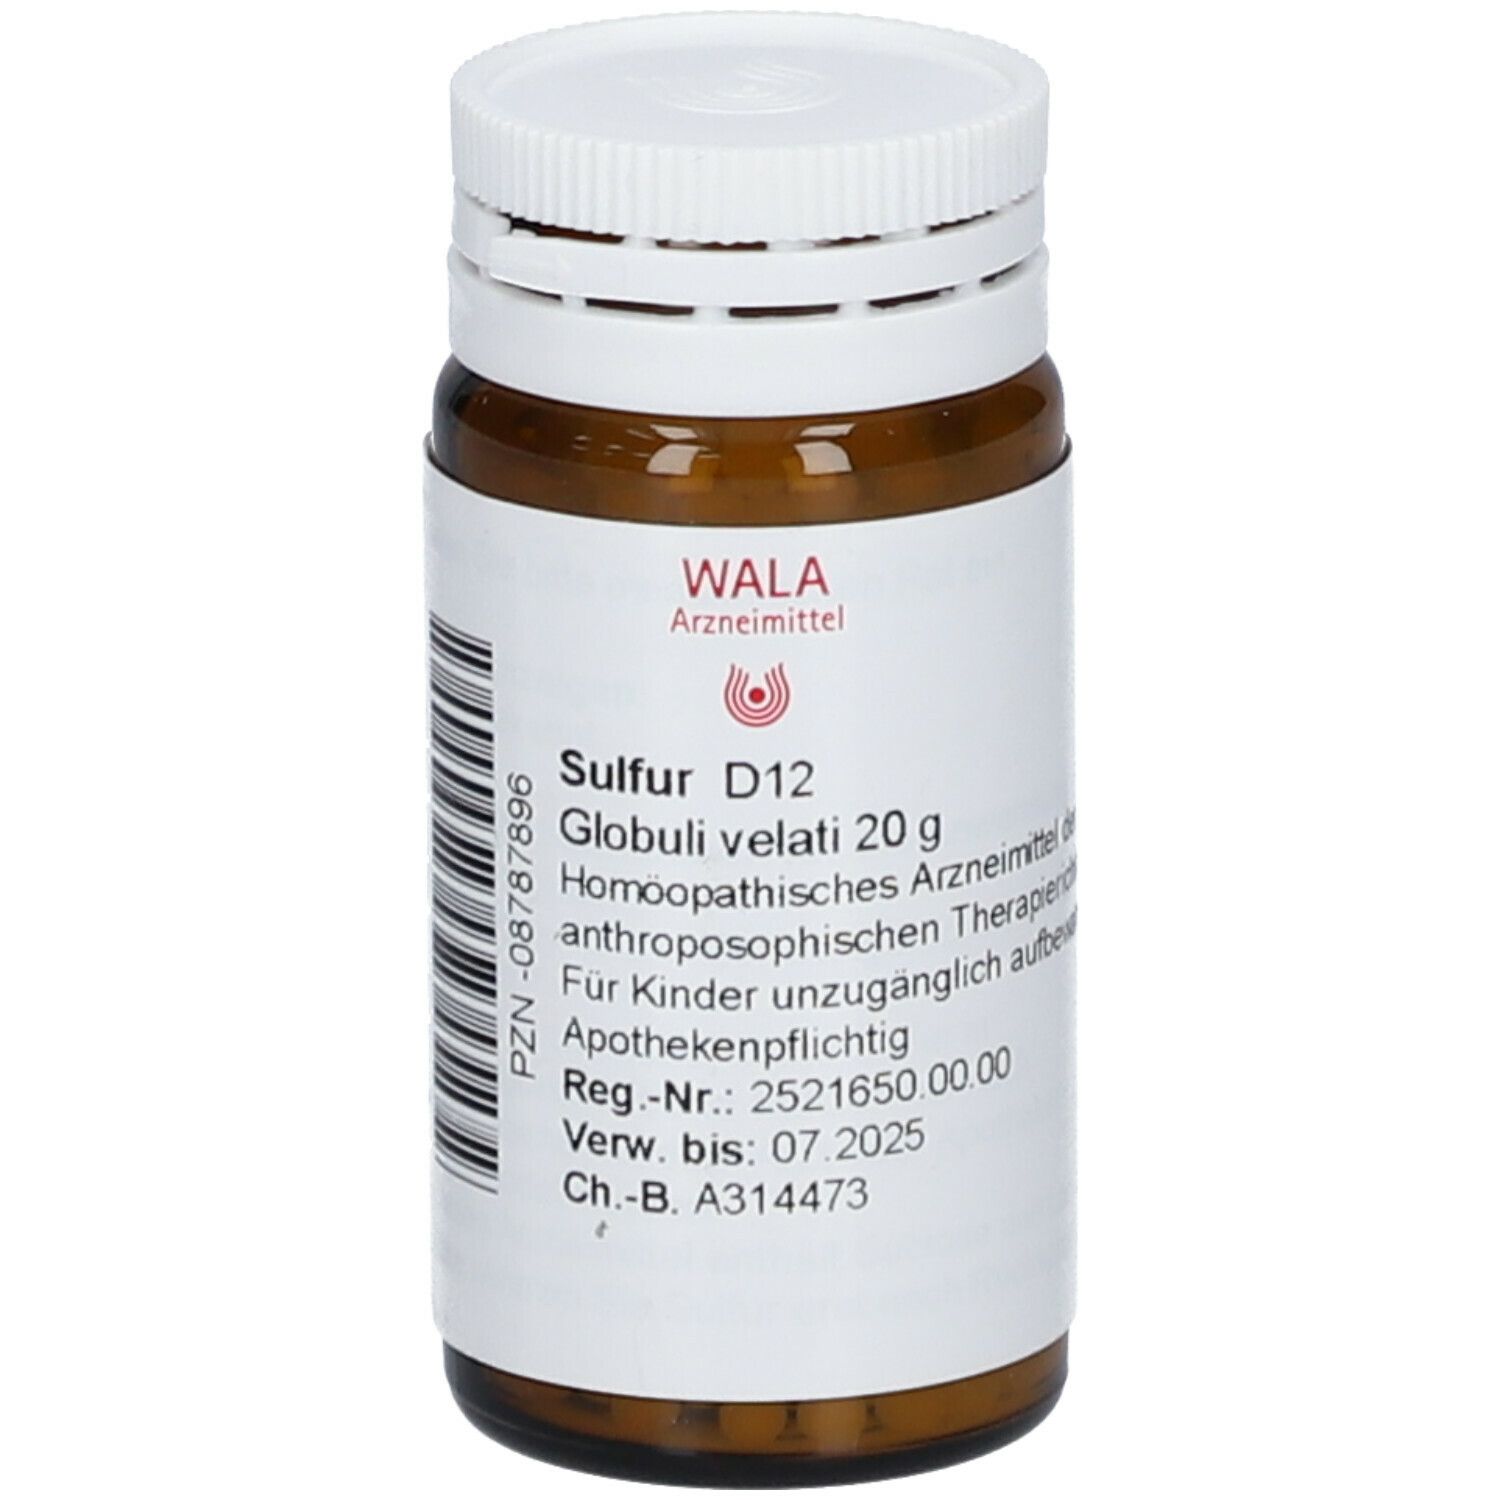 WALA® Sulfur D 12